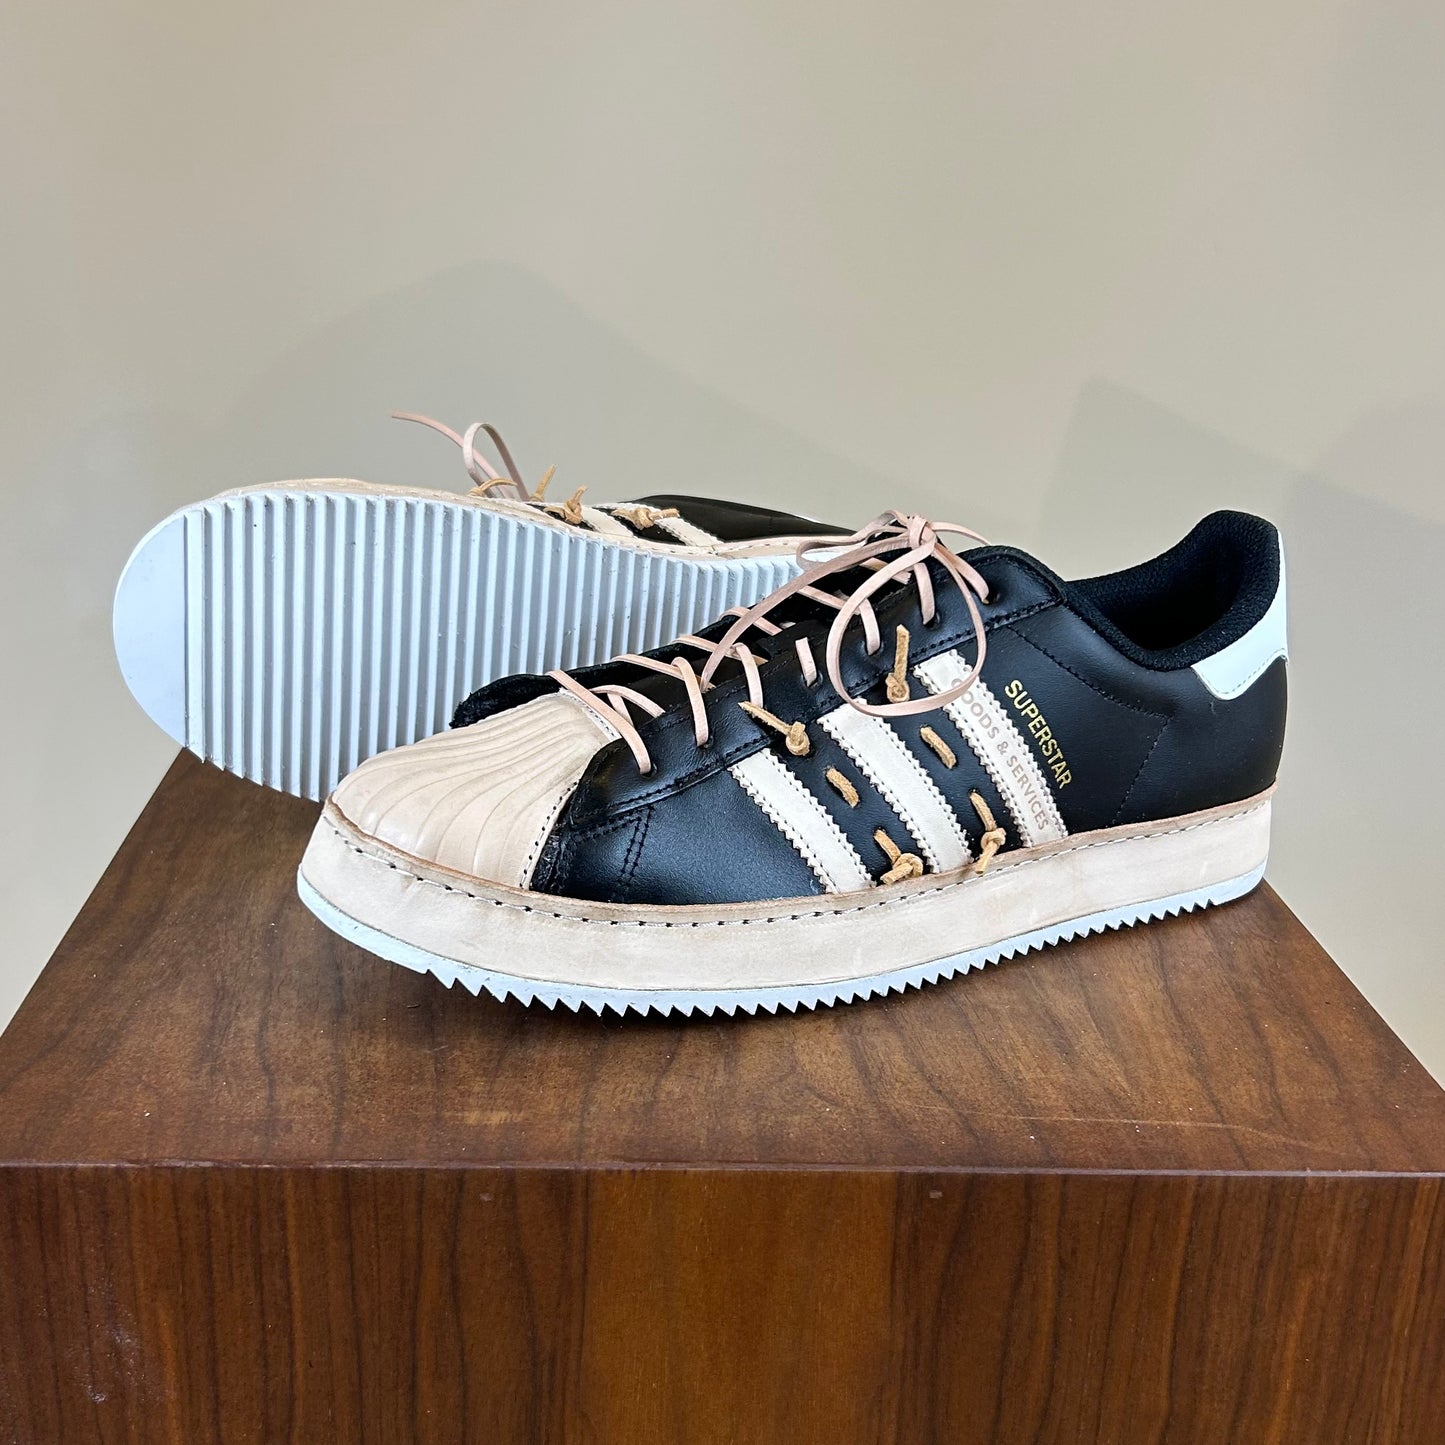 Adidas Superstar Handmade Leather Resole